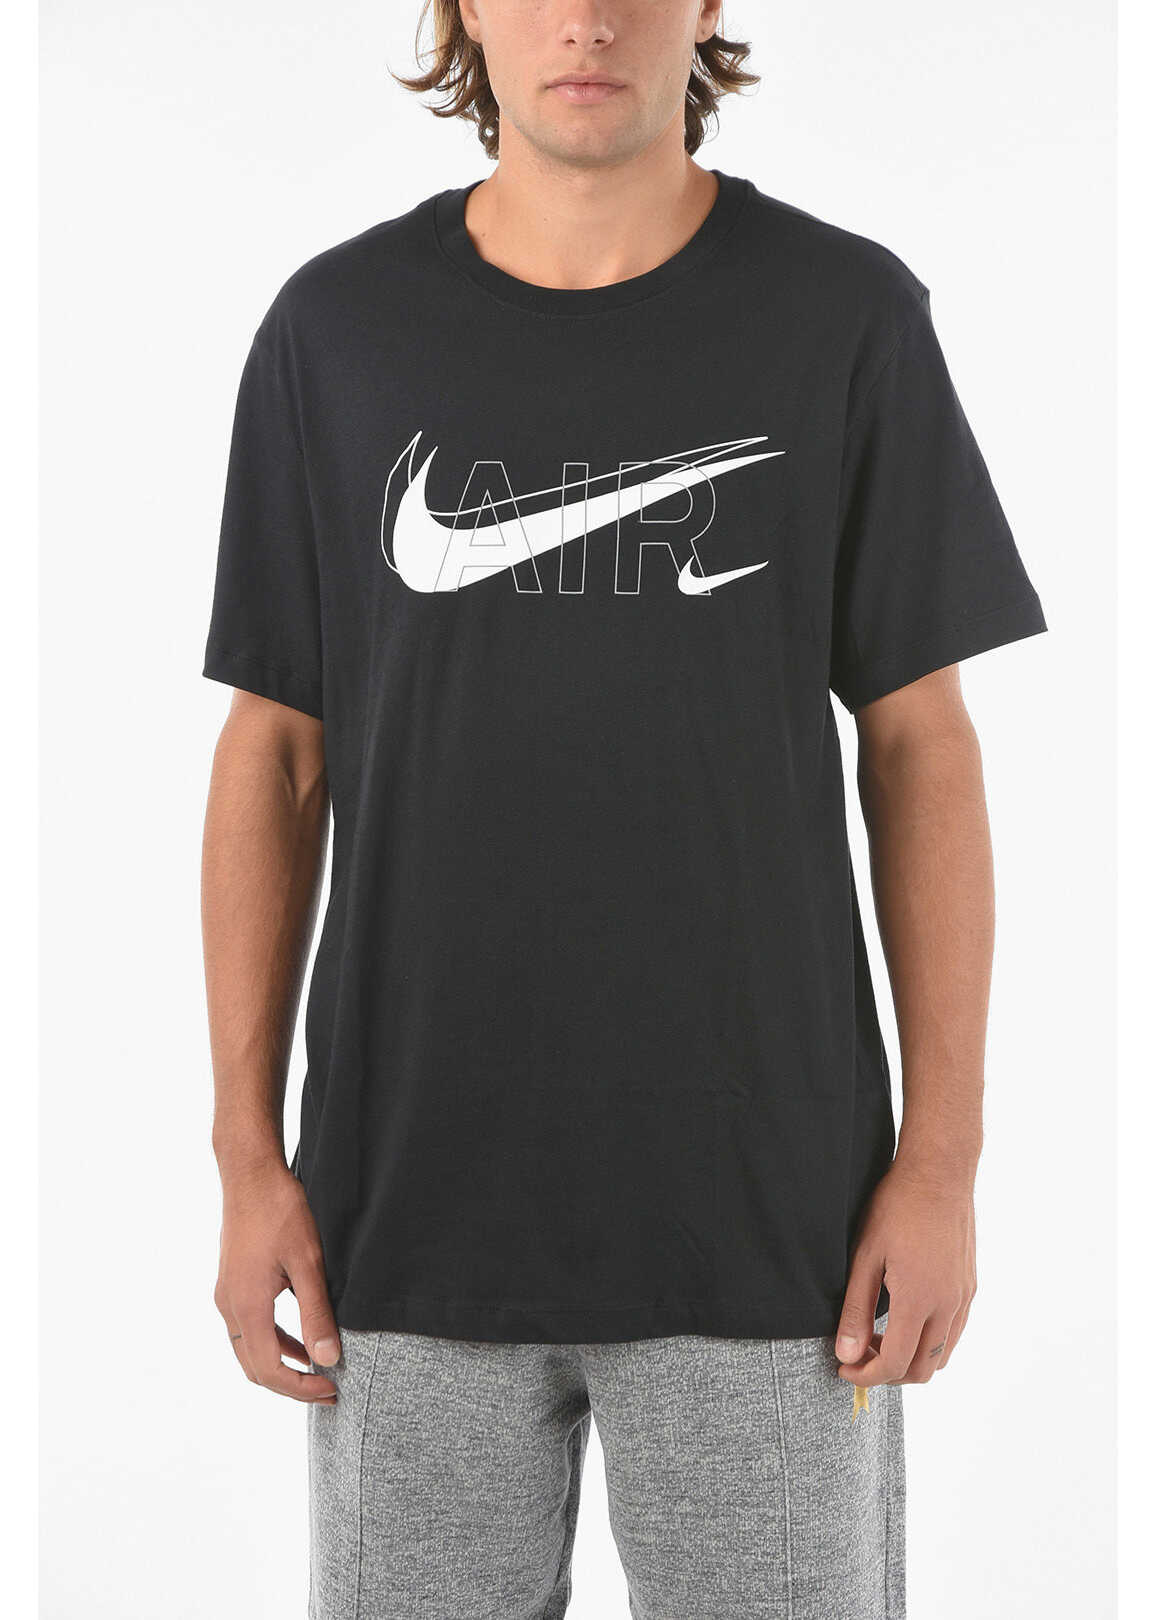 Nike Front Printed Crew-Neck T-Shirt Black image1